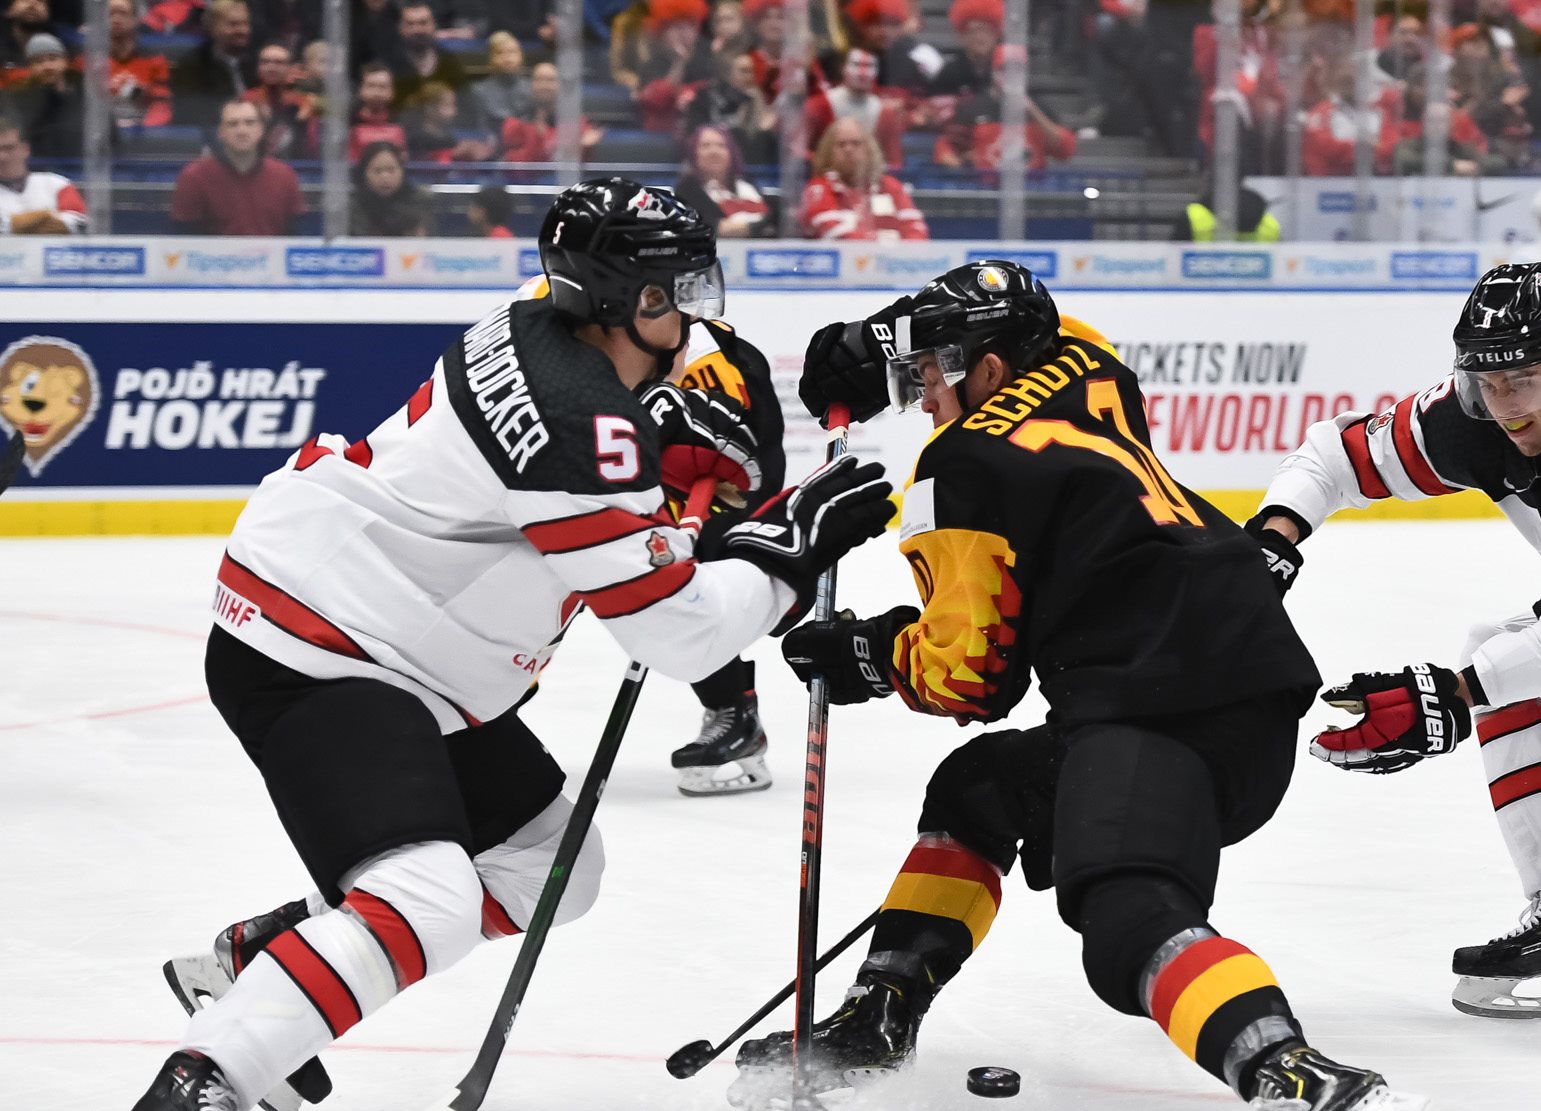 IIHF - Canada back on track